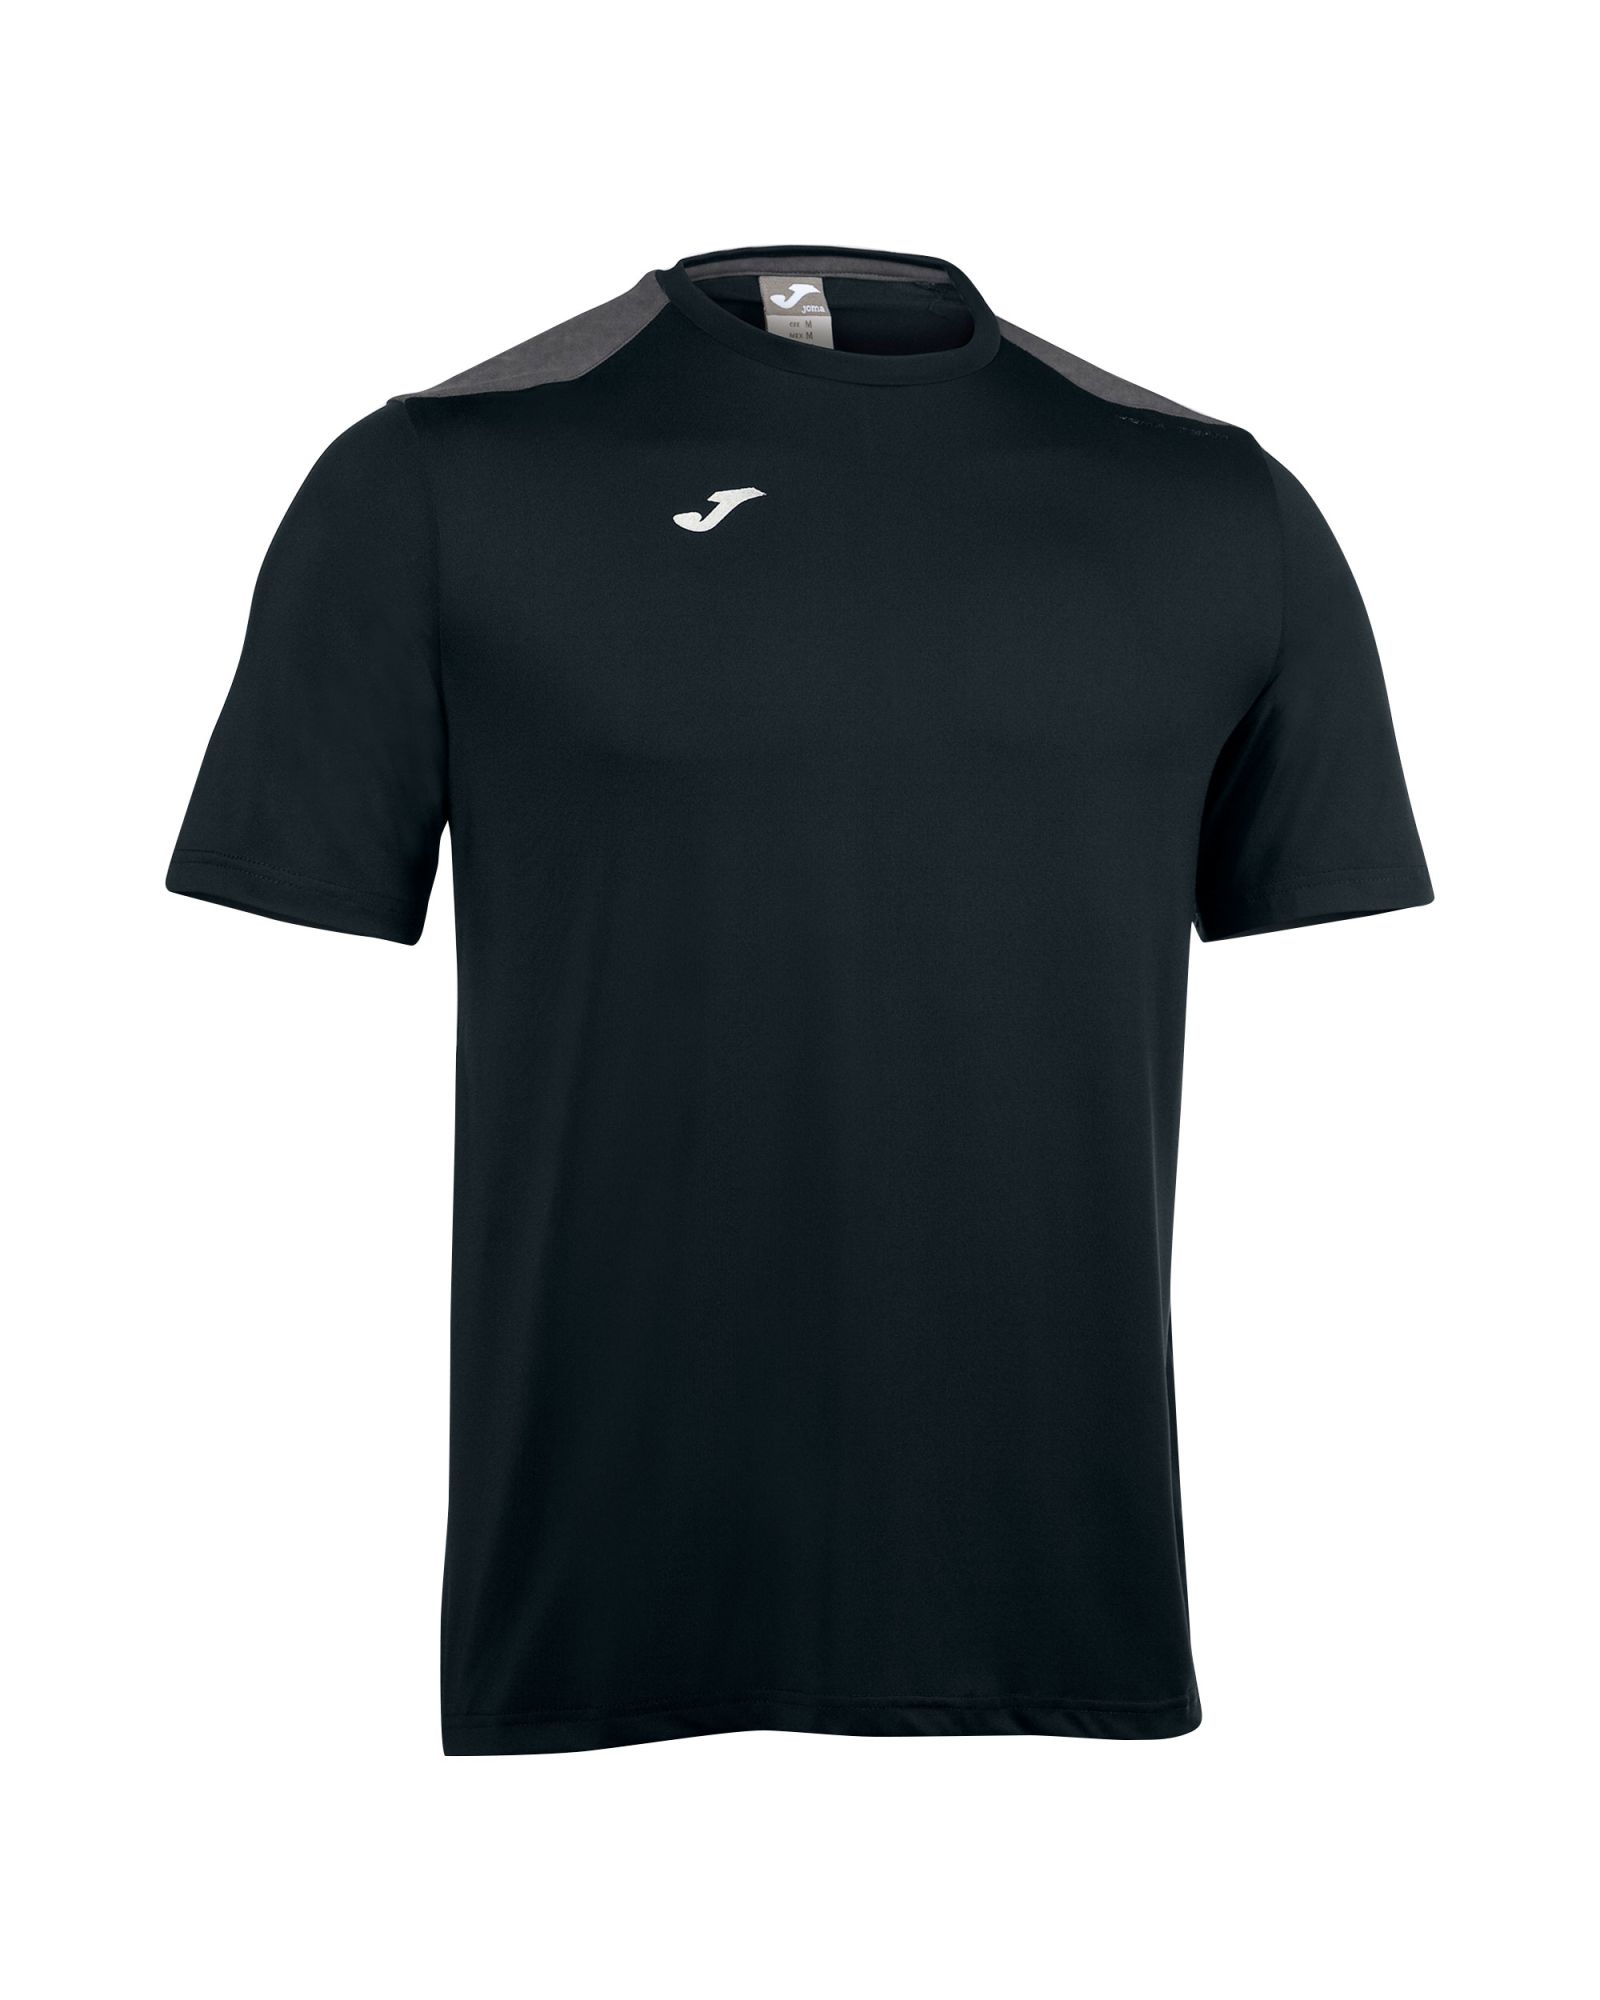 Camiseta de Tenis y Padel Comfort Negro - Fútbol Factory